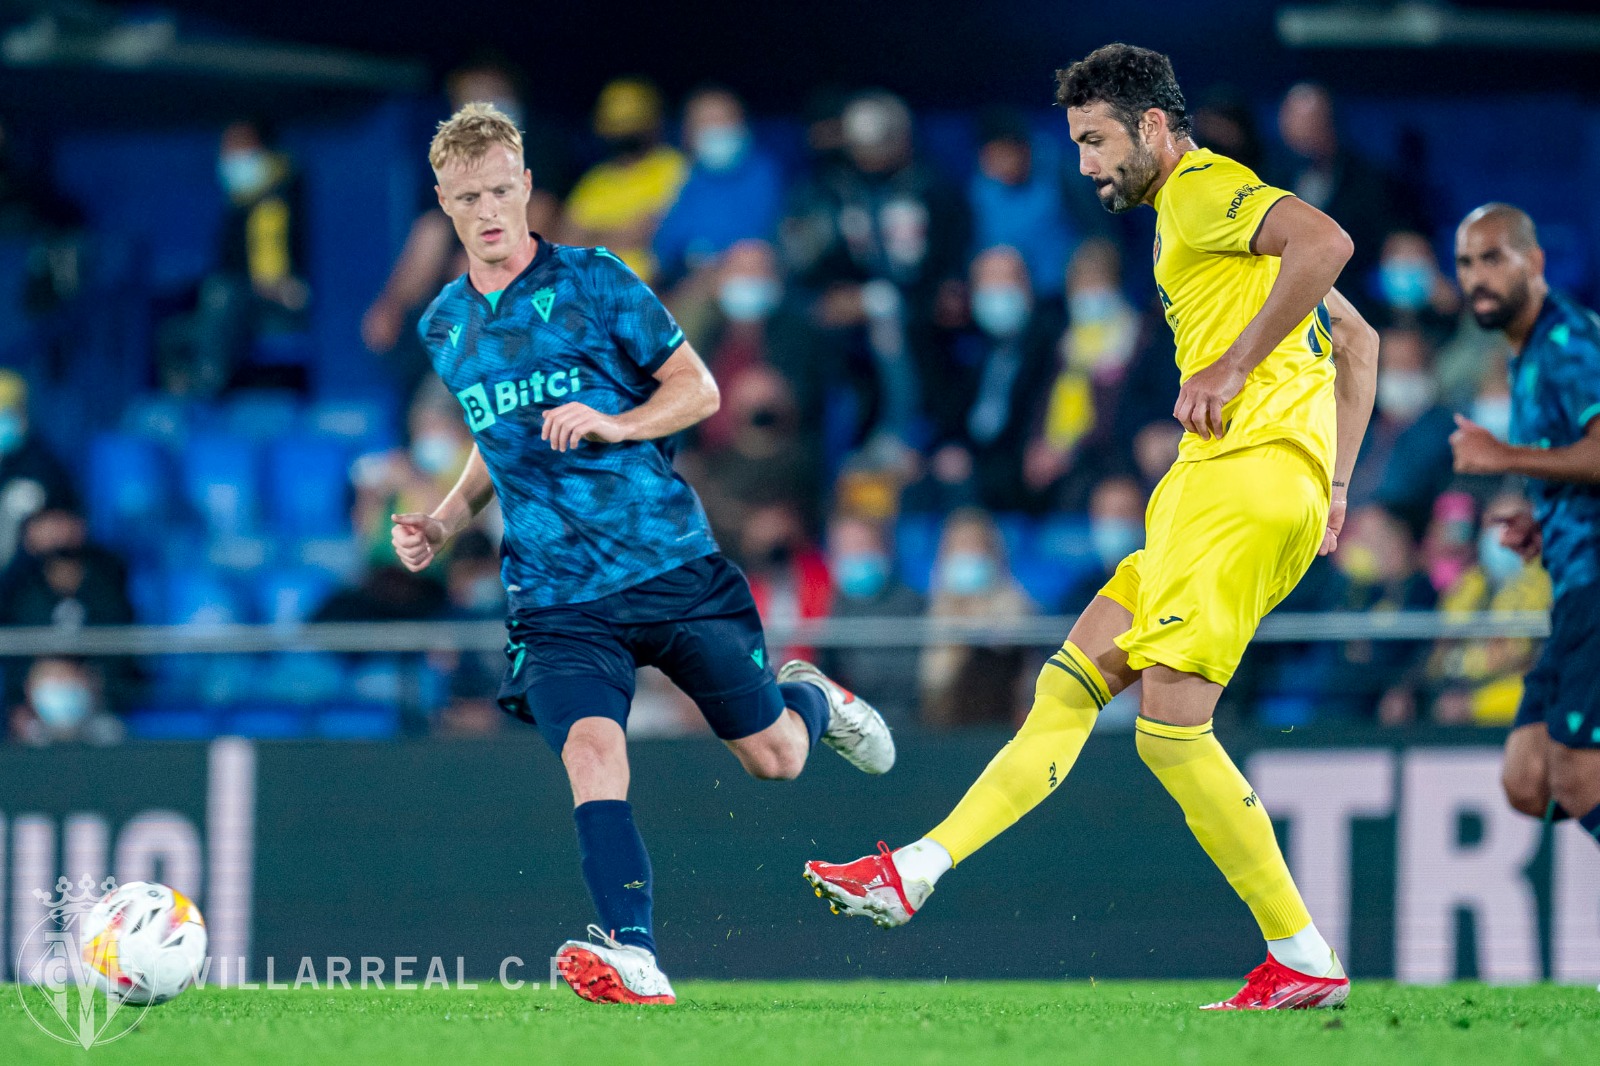 Villarreal fight back to draw 3-3 with Cadiz in thriller at La Ceramica - Football Espana